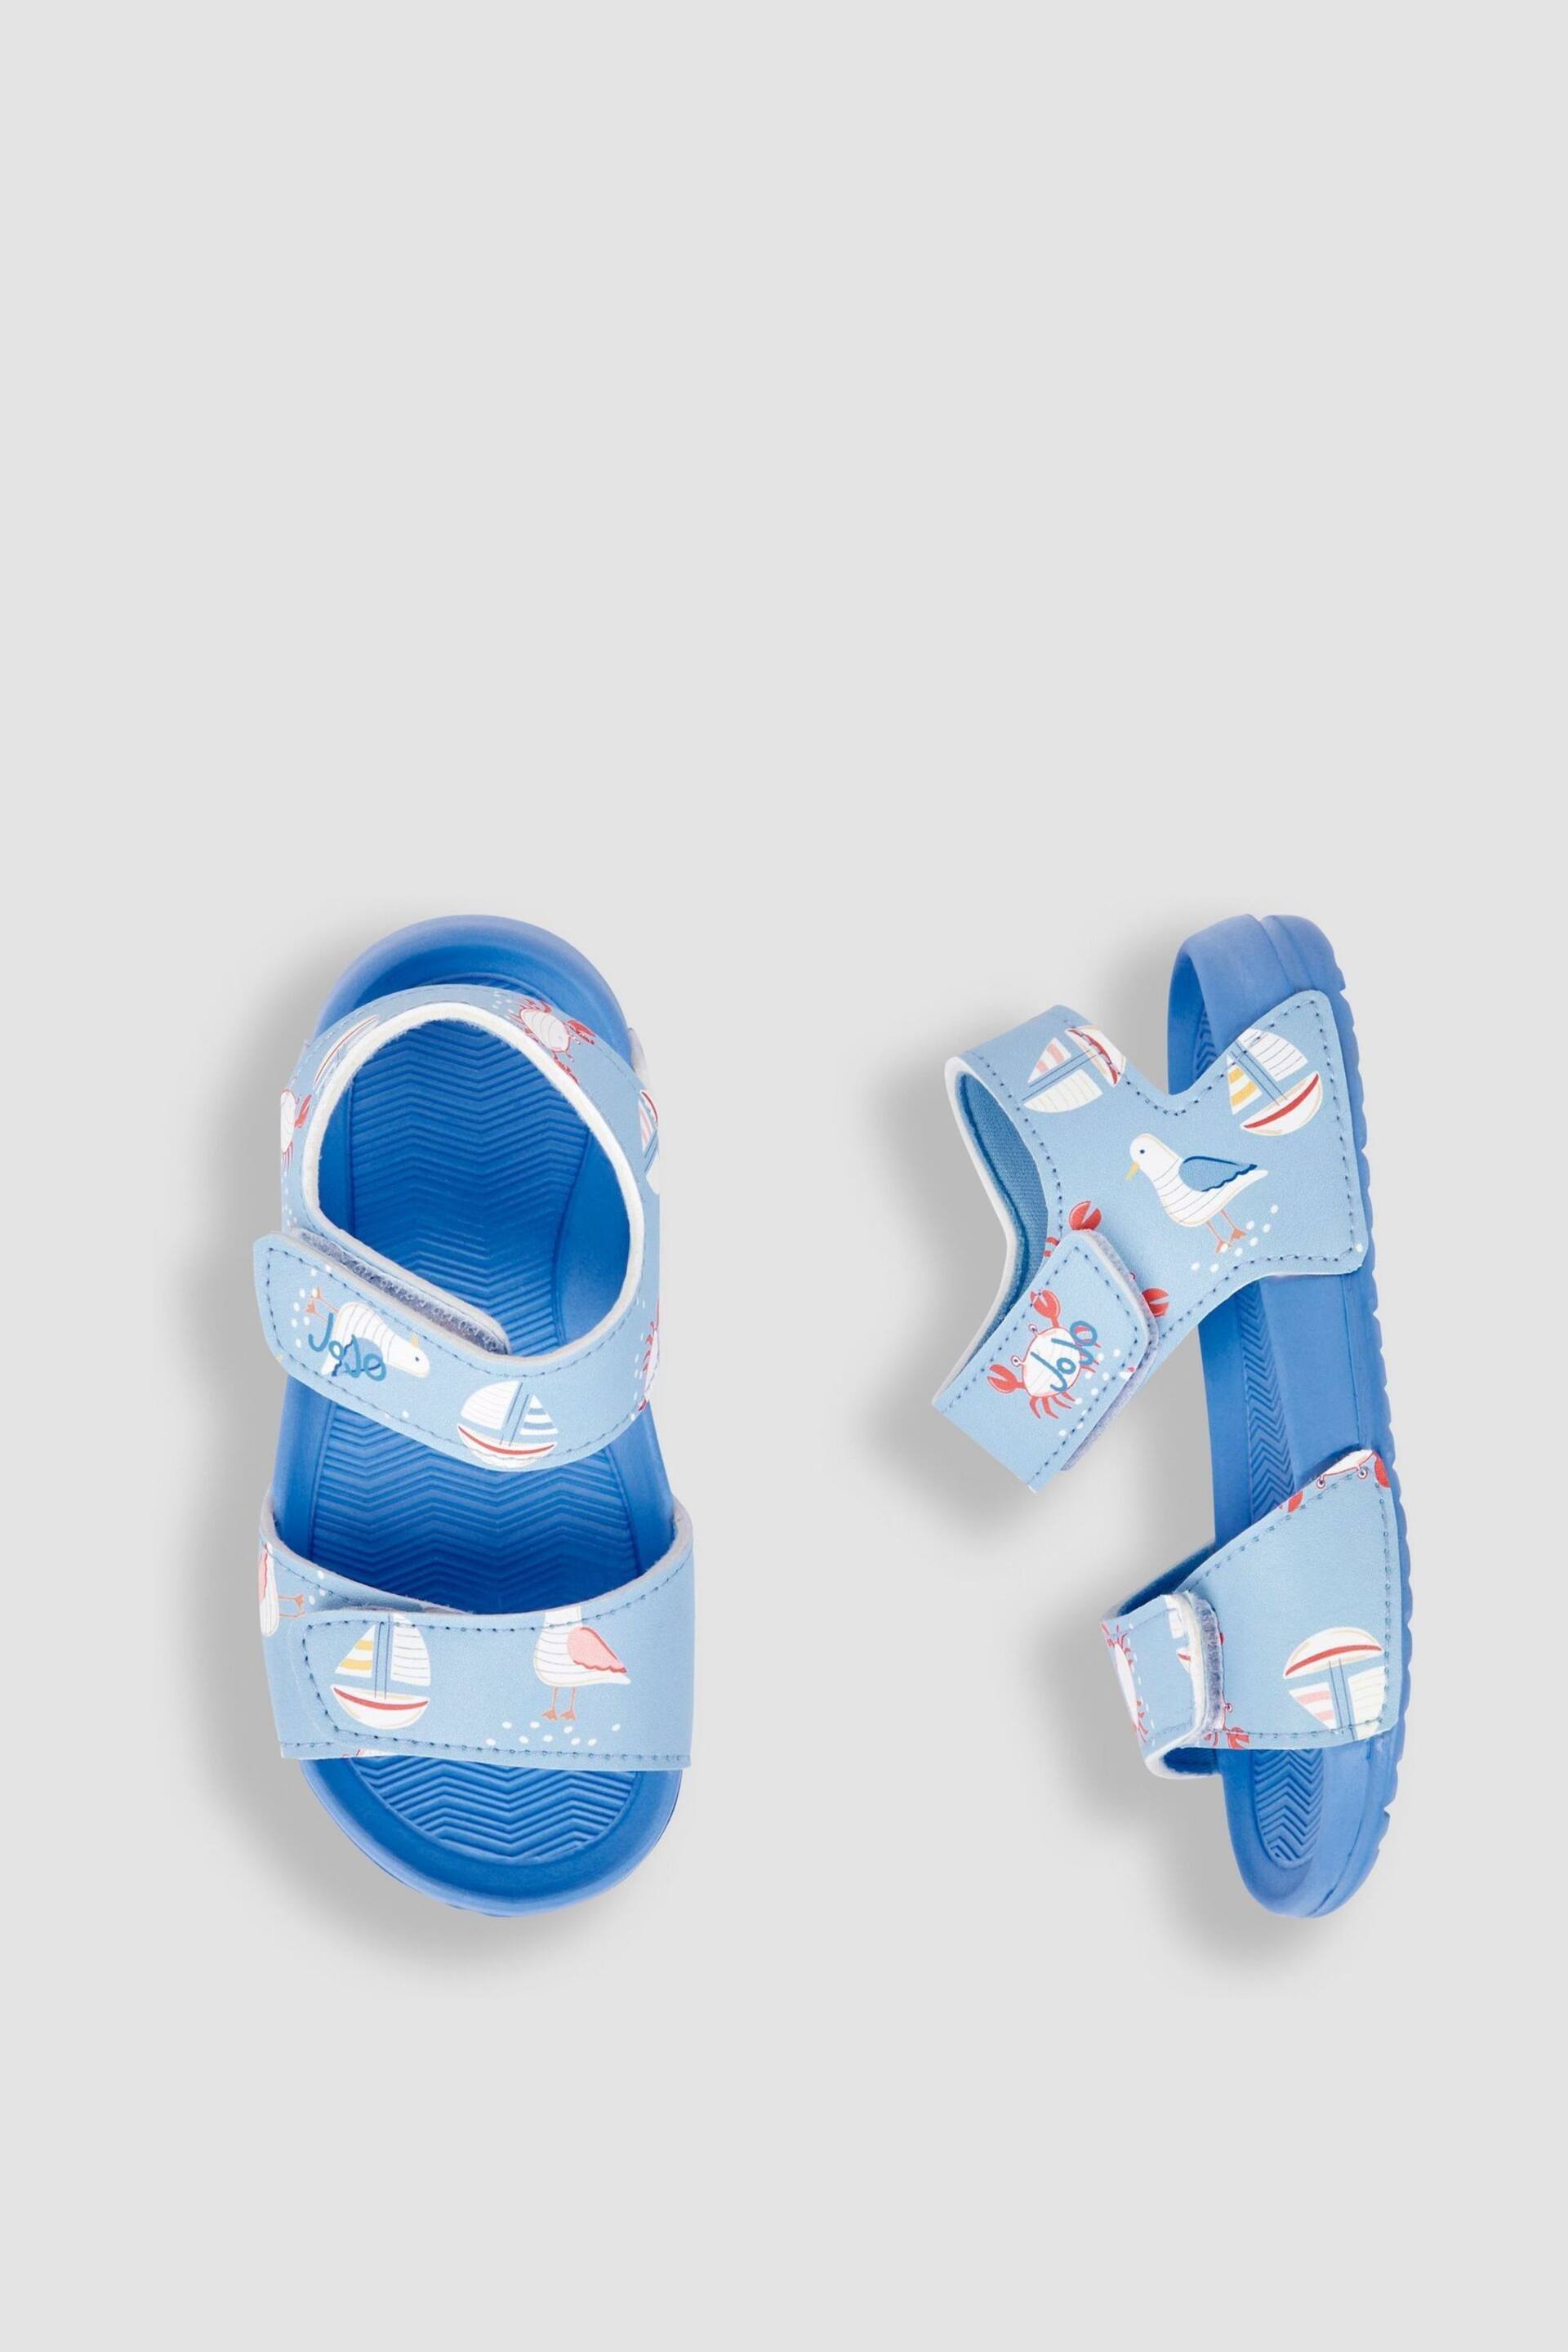 JoJo Maman Bébé Blue Summer Sandals - Image 3 of 4